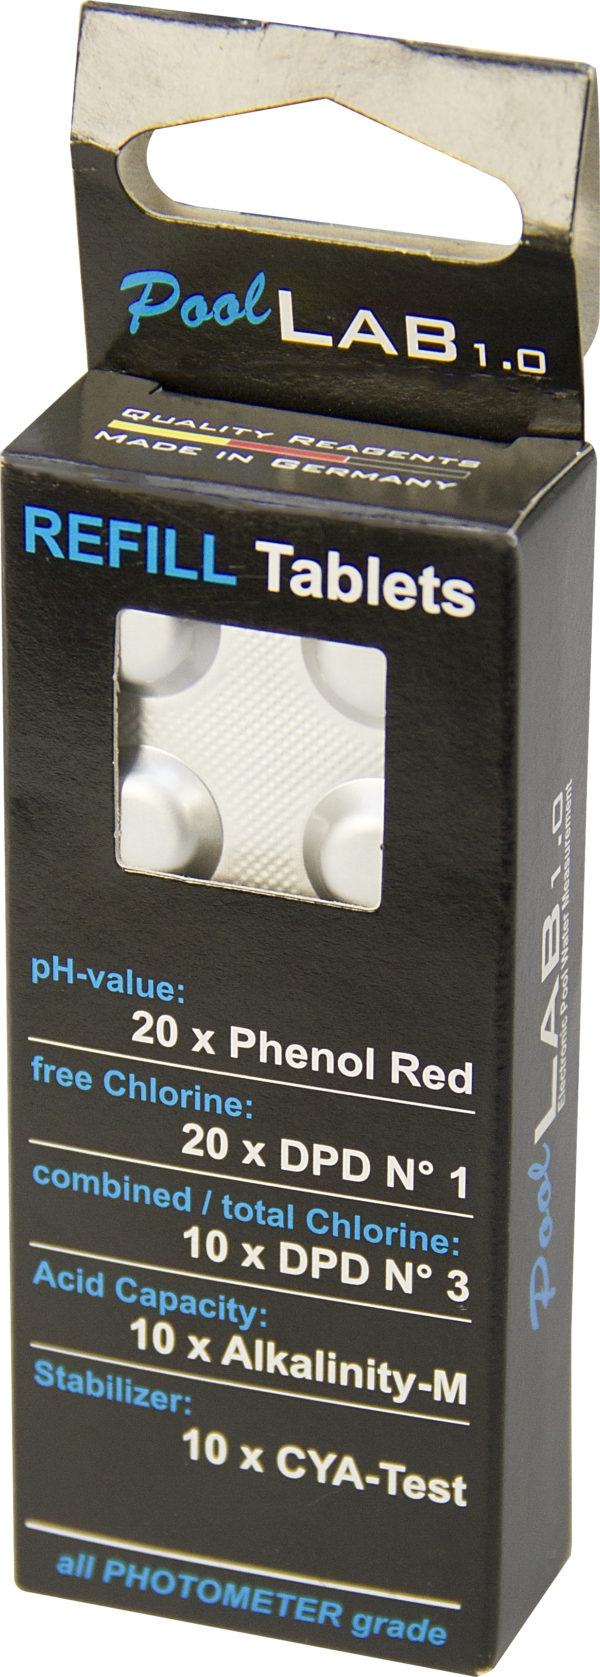 PoolLAB Refill Tablets